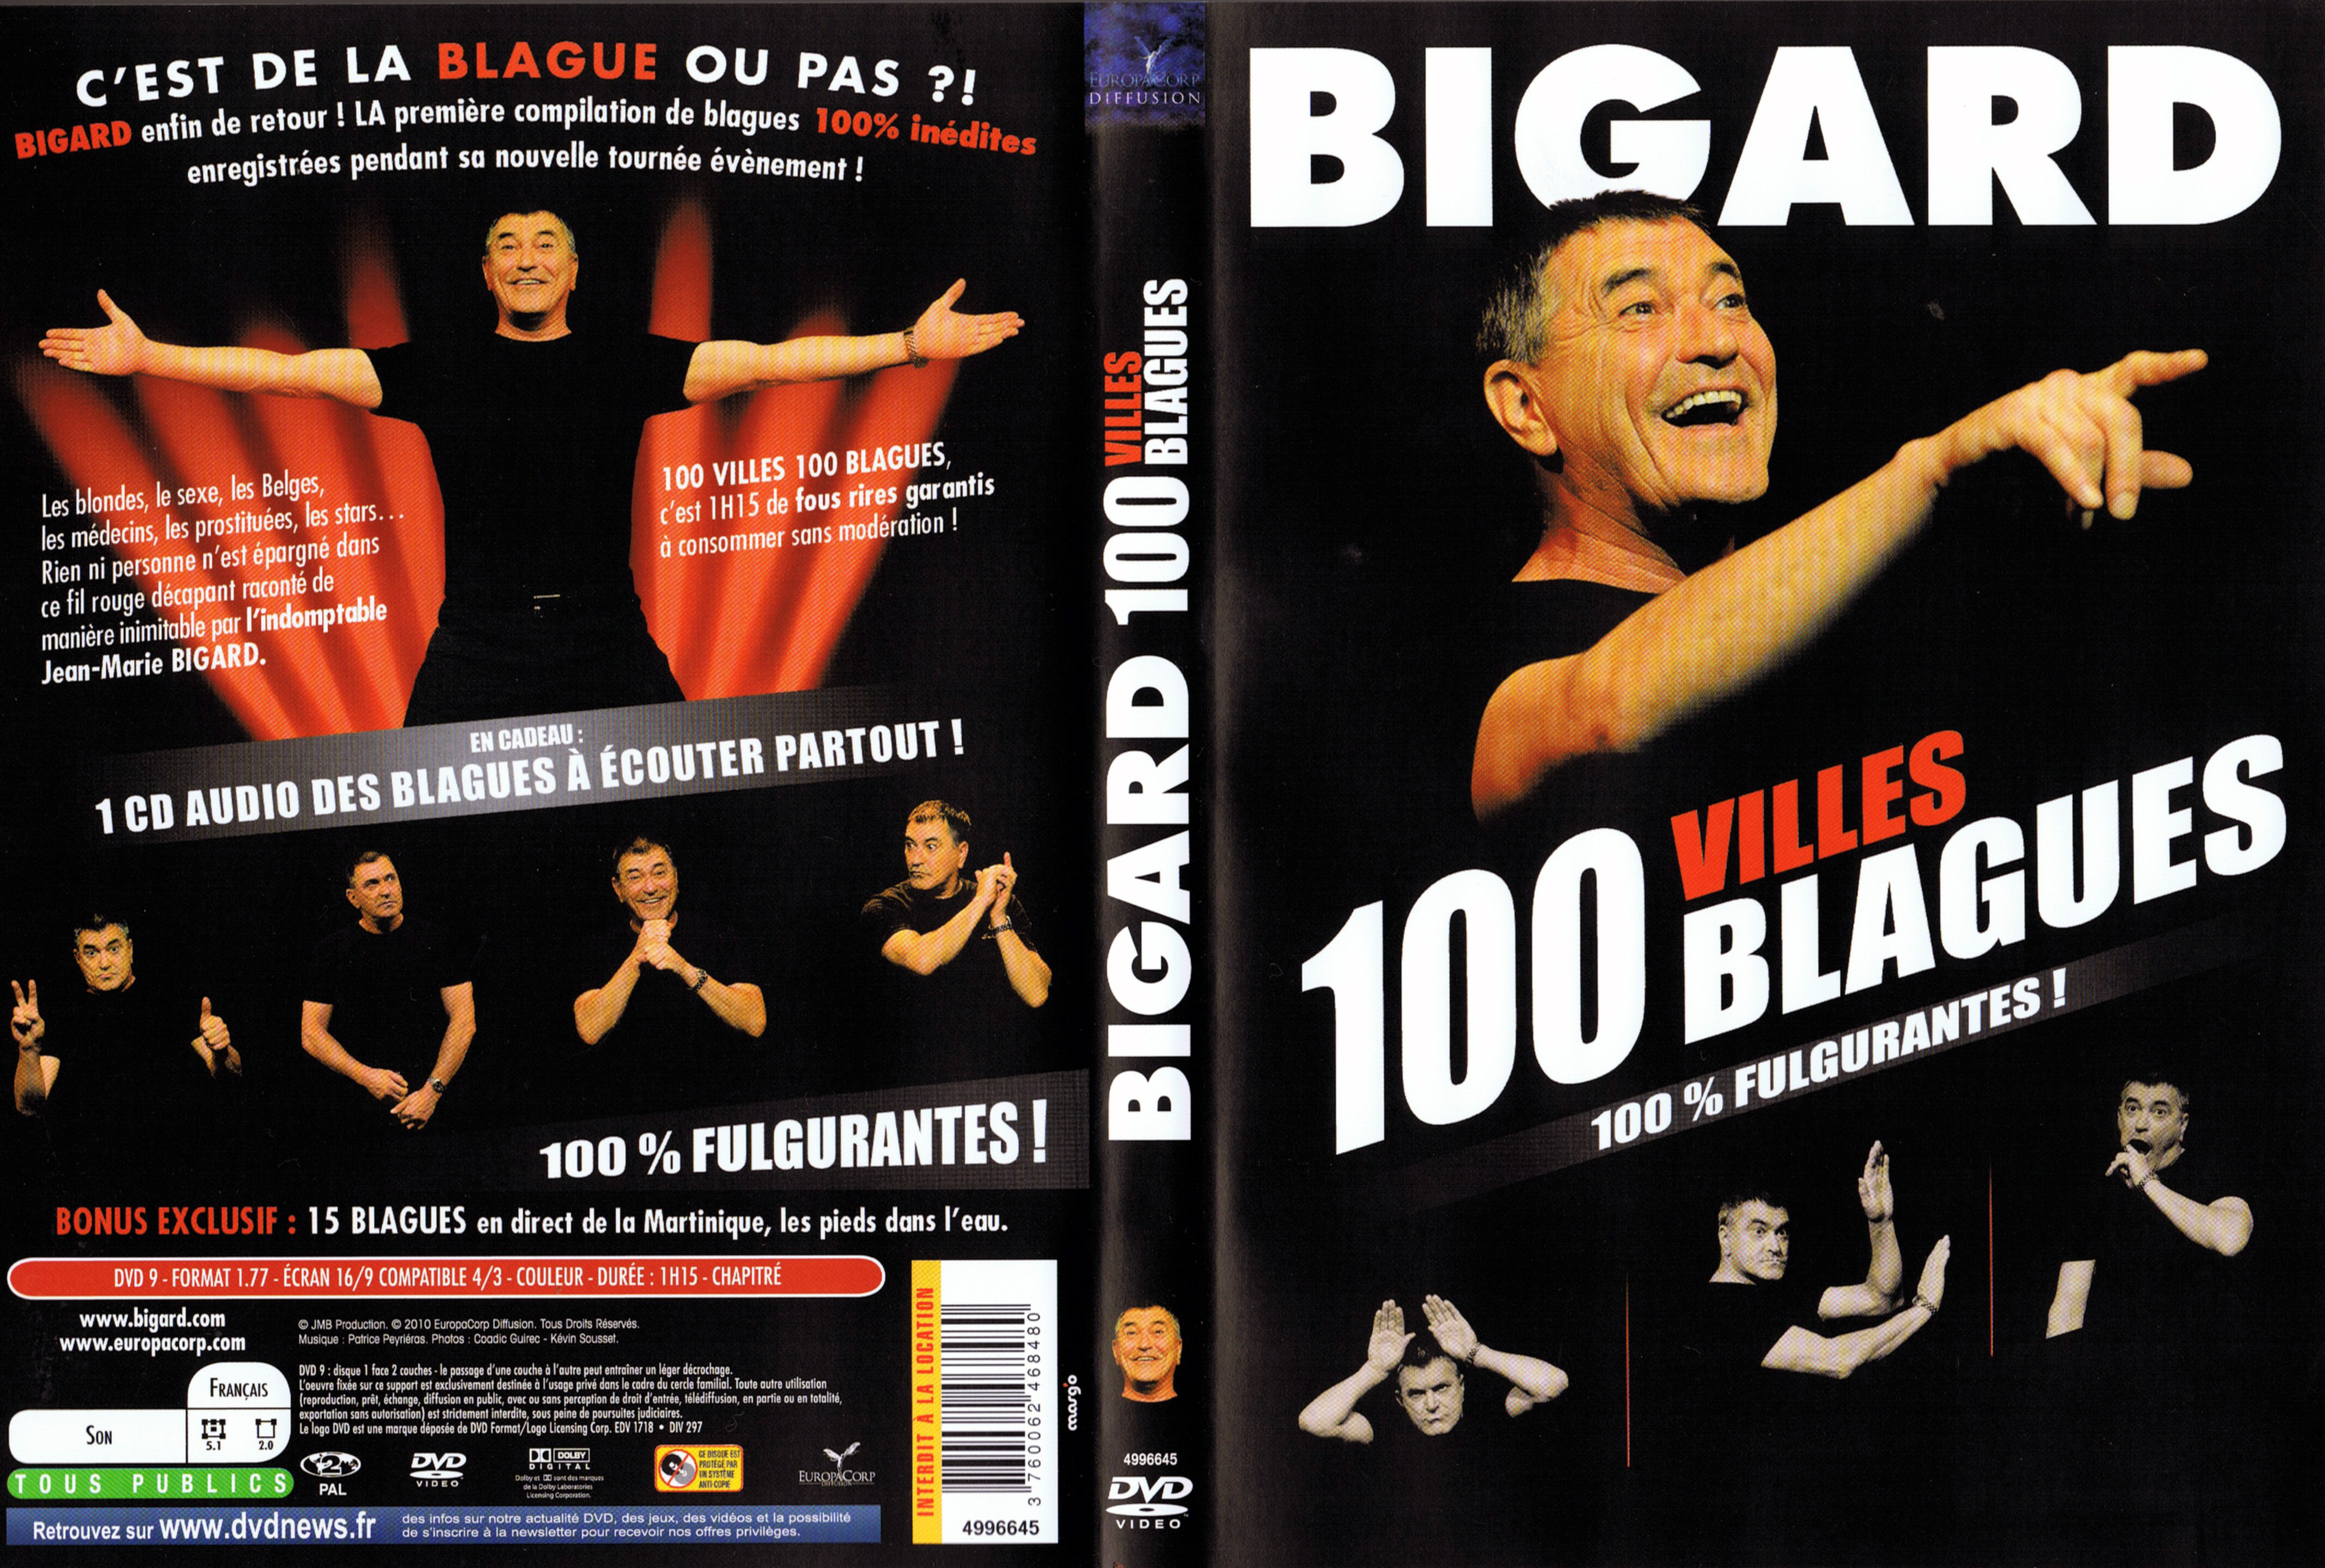 Jaquette DVD Bigard 100 blagues 100 villes